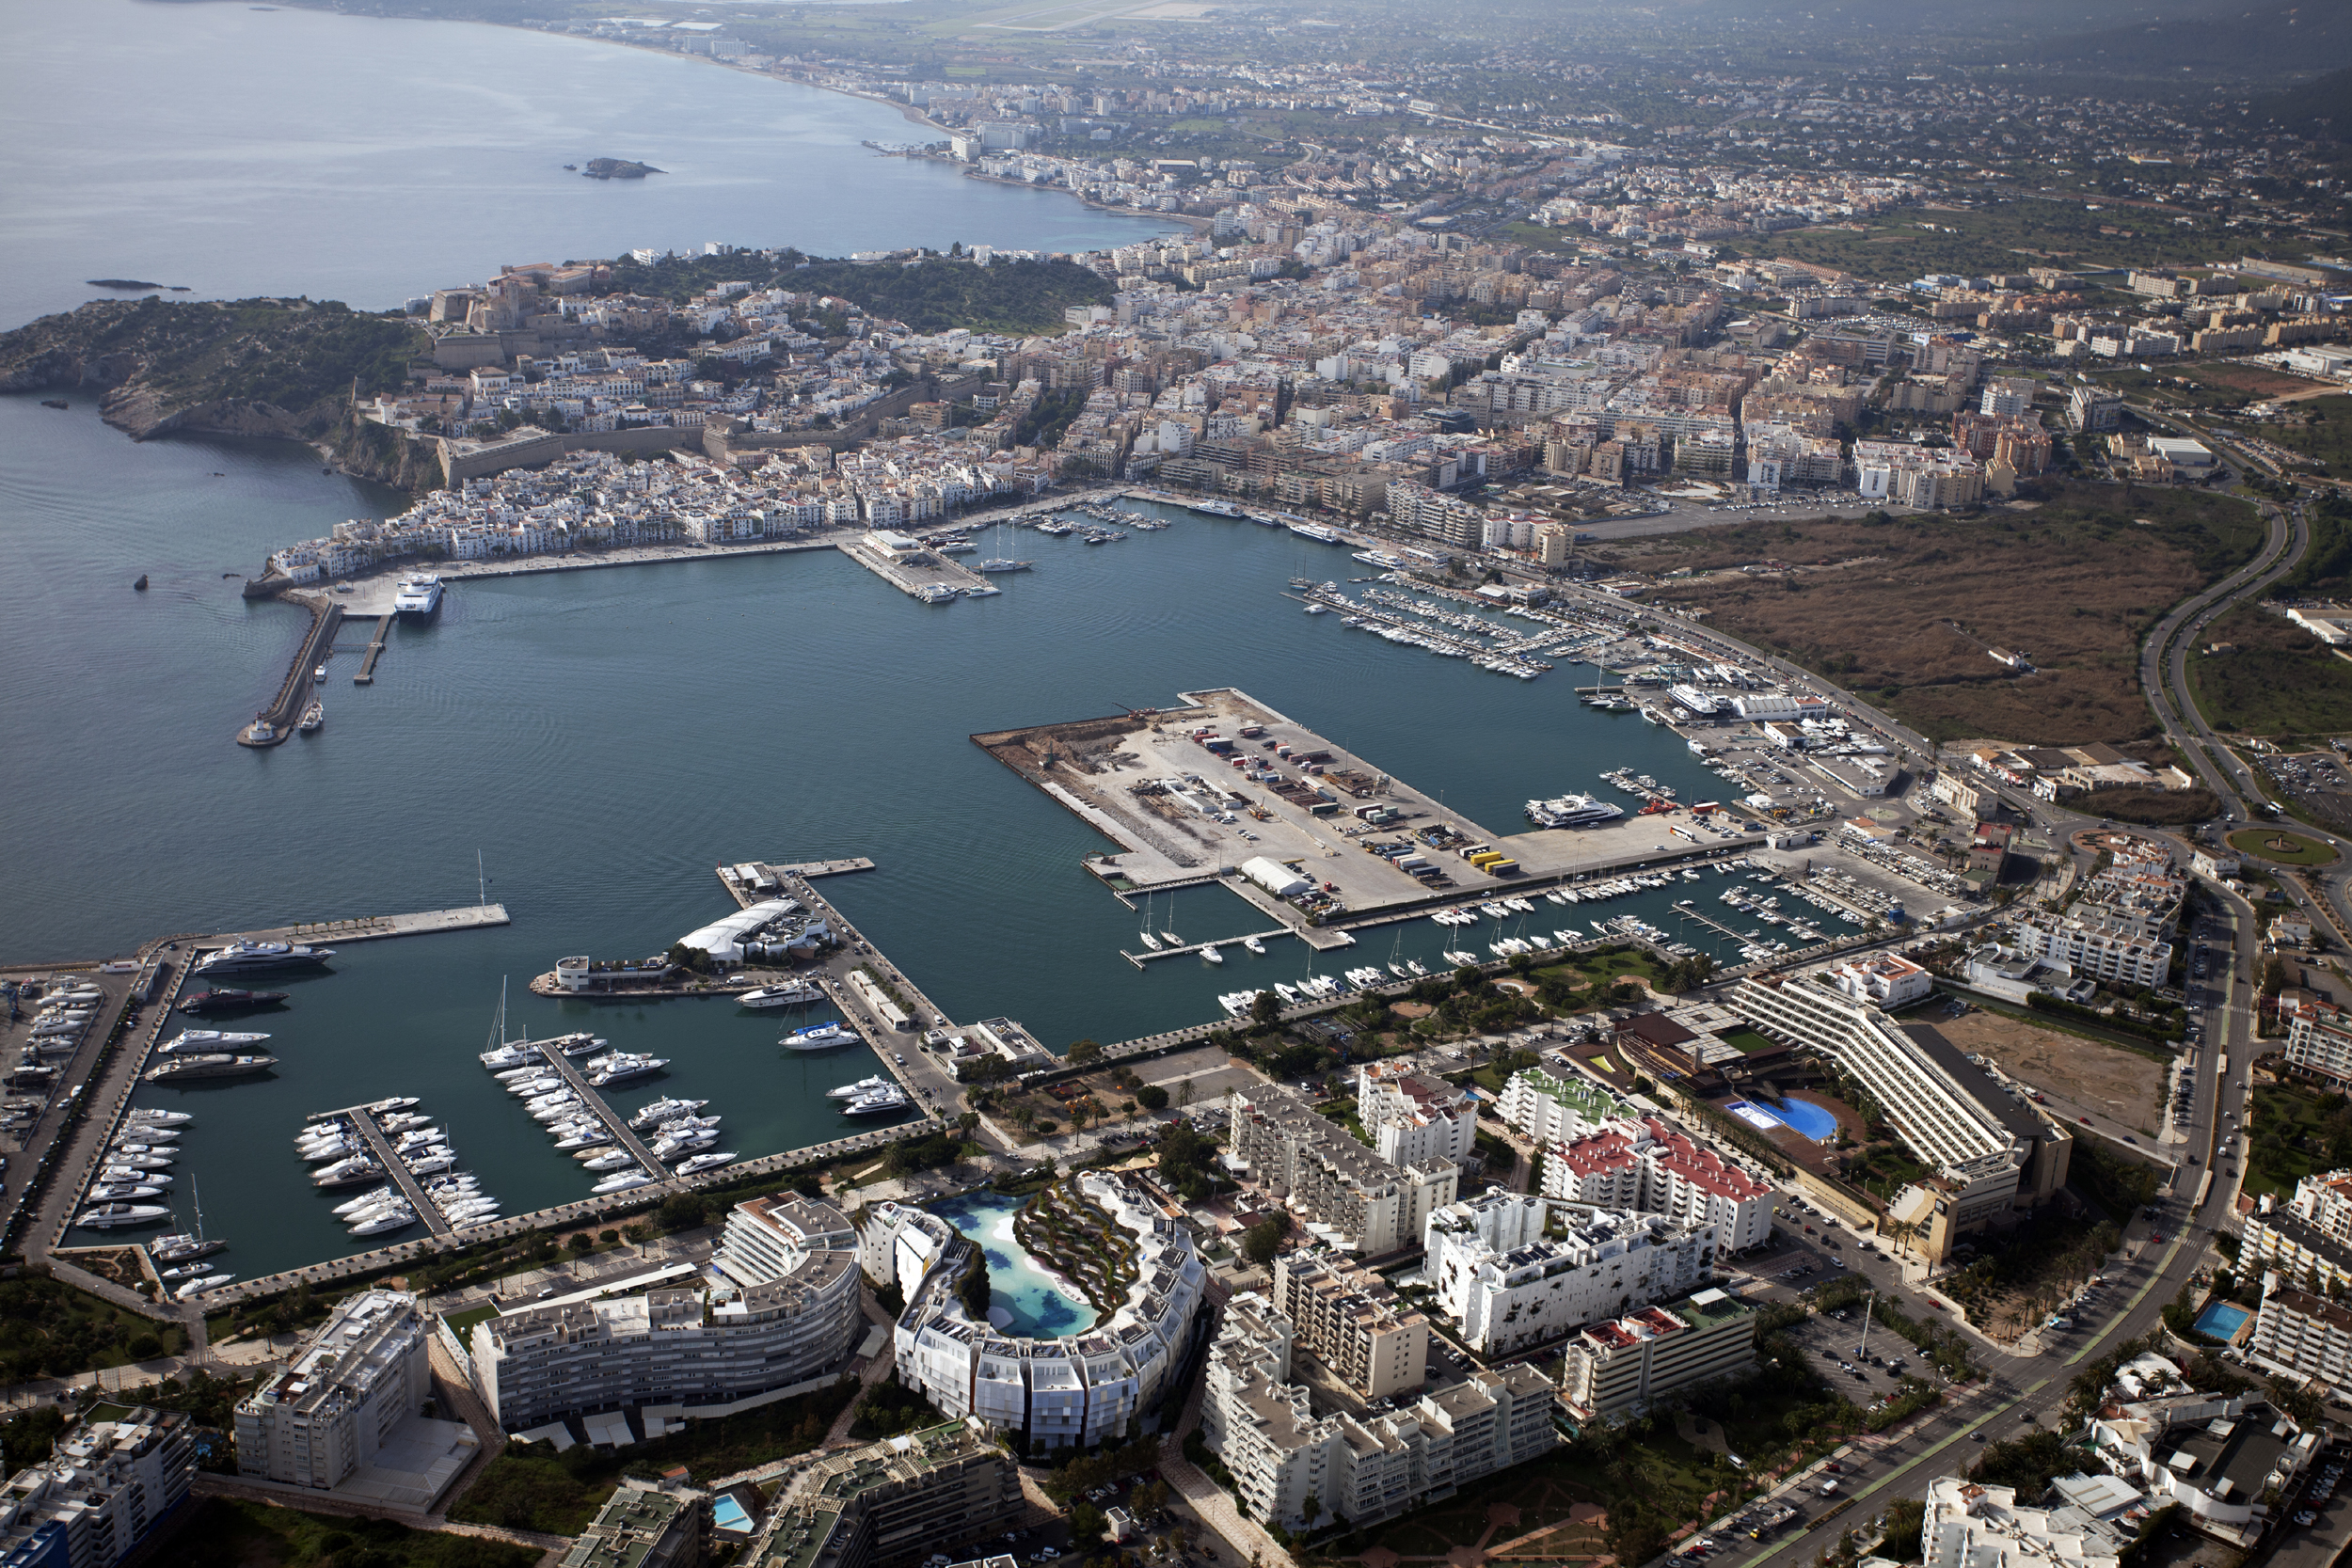 Marina Ibiza extends its concession term